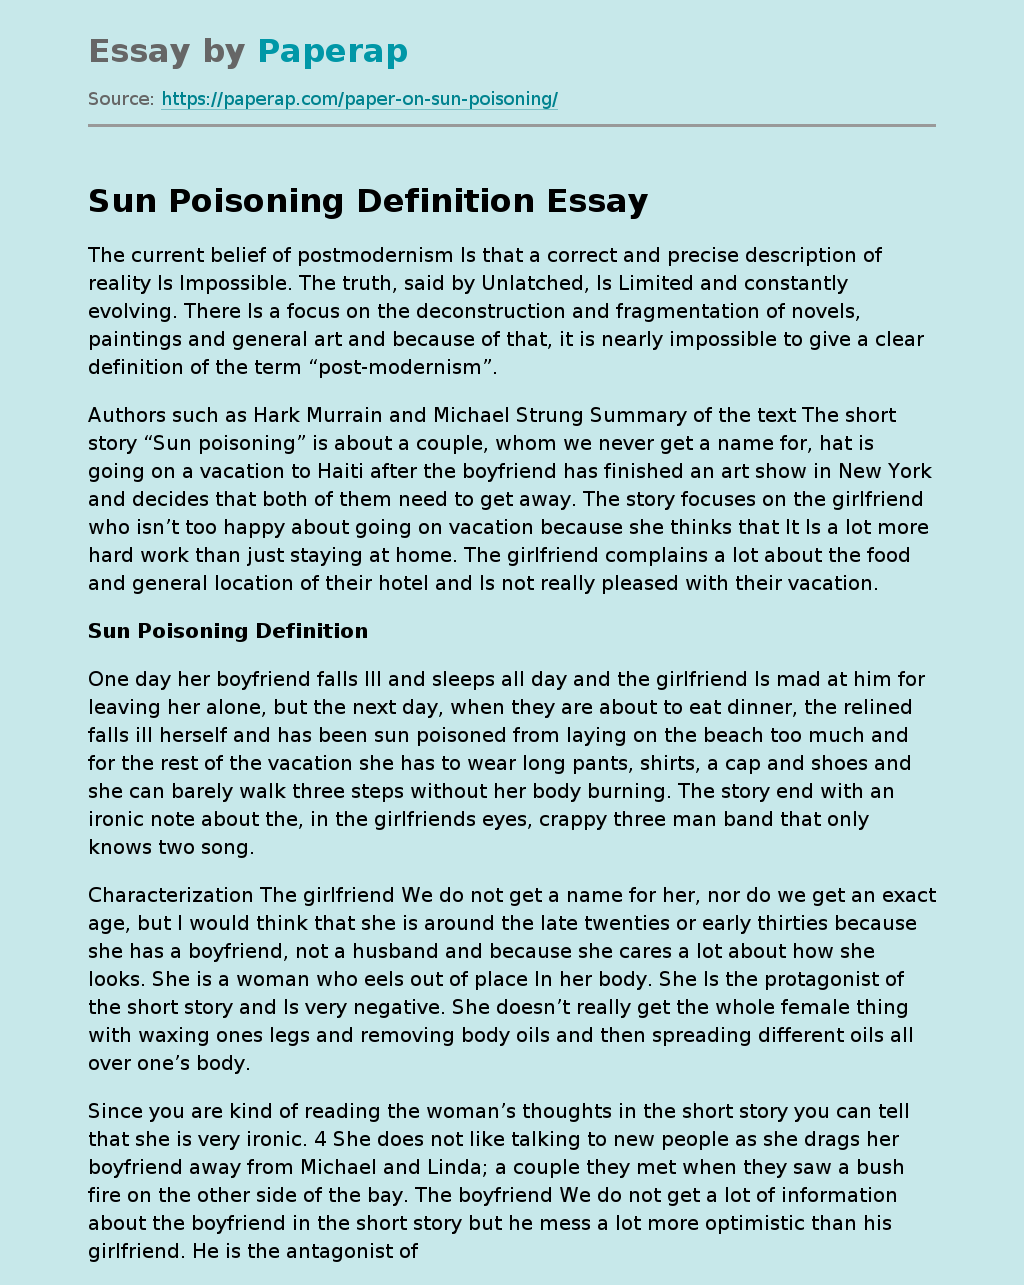 The Short Story “Sun Poisoning”